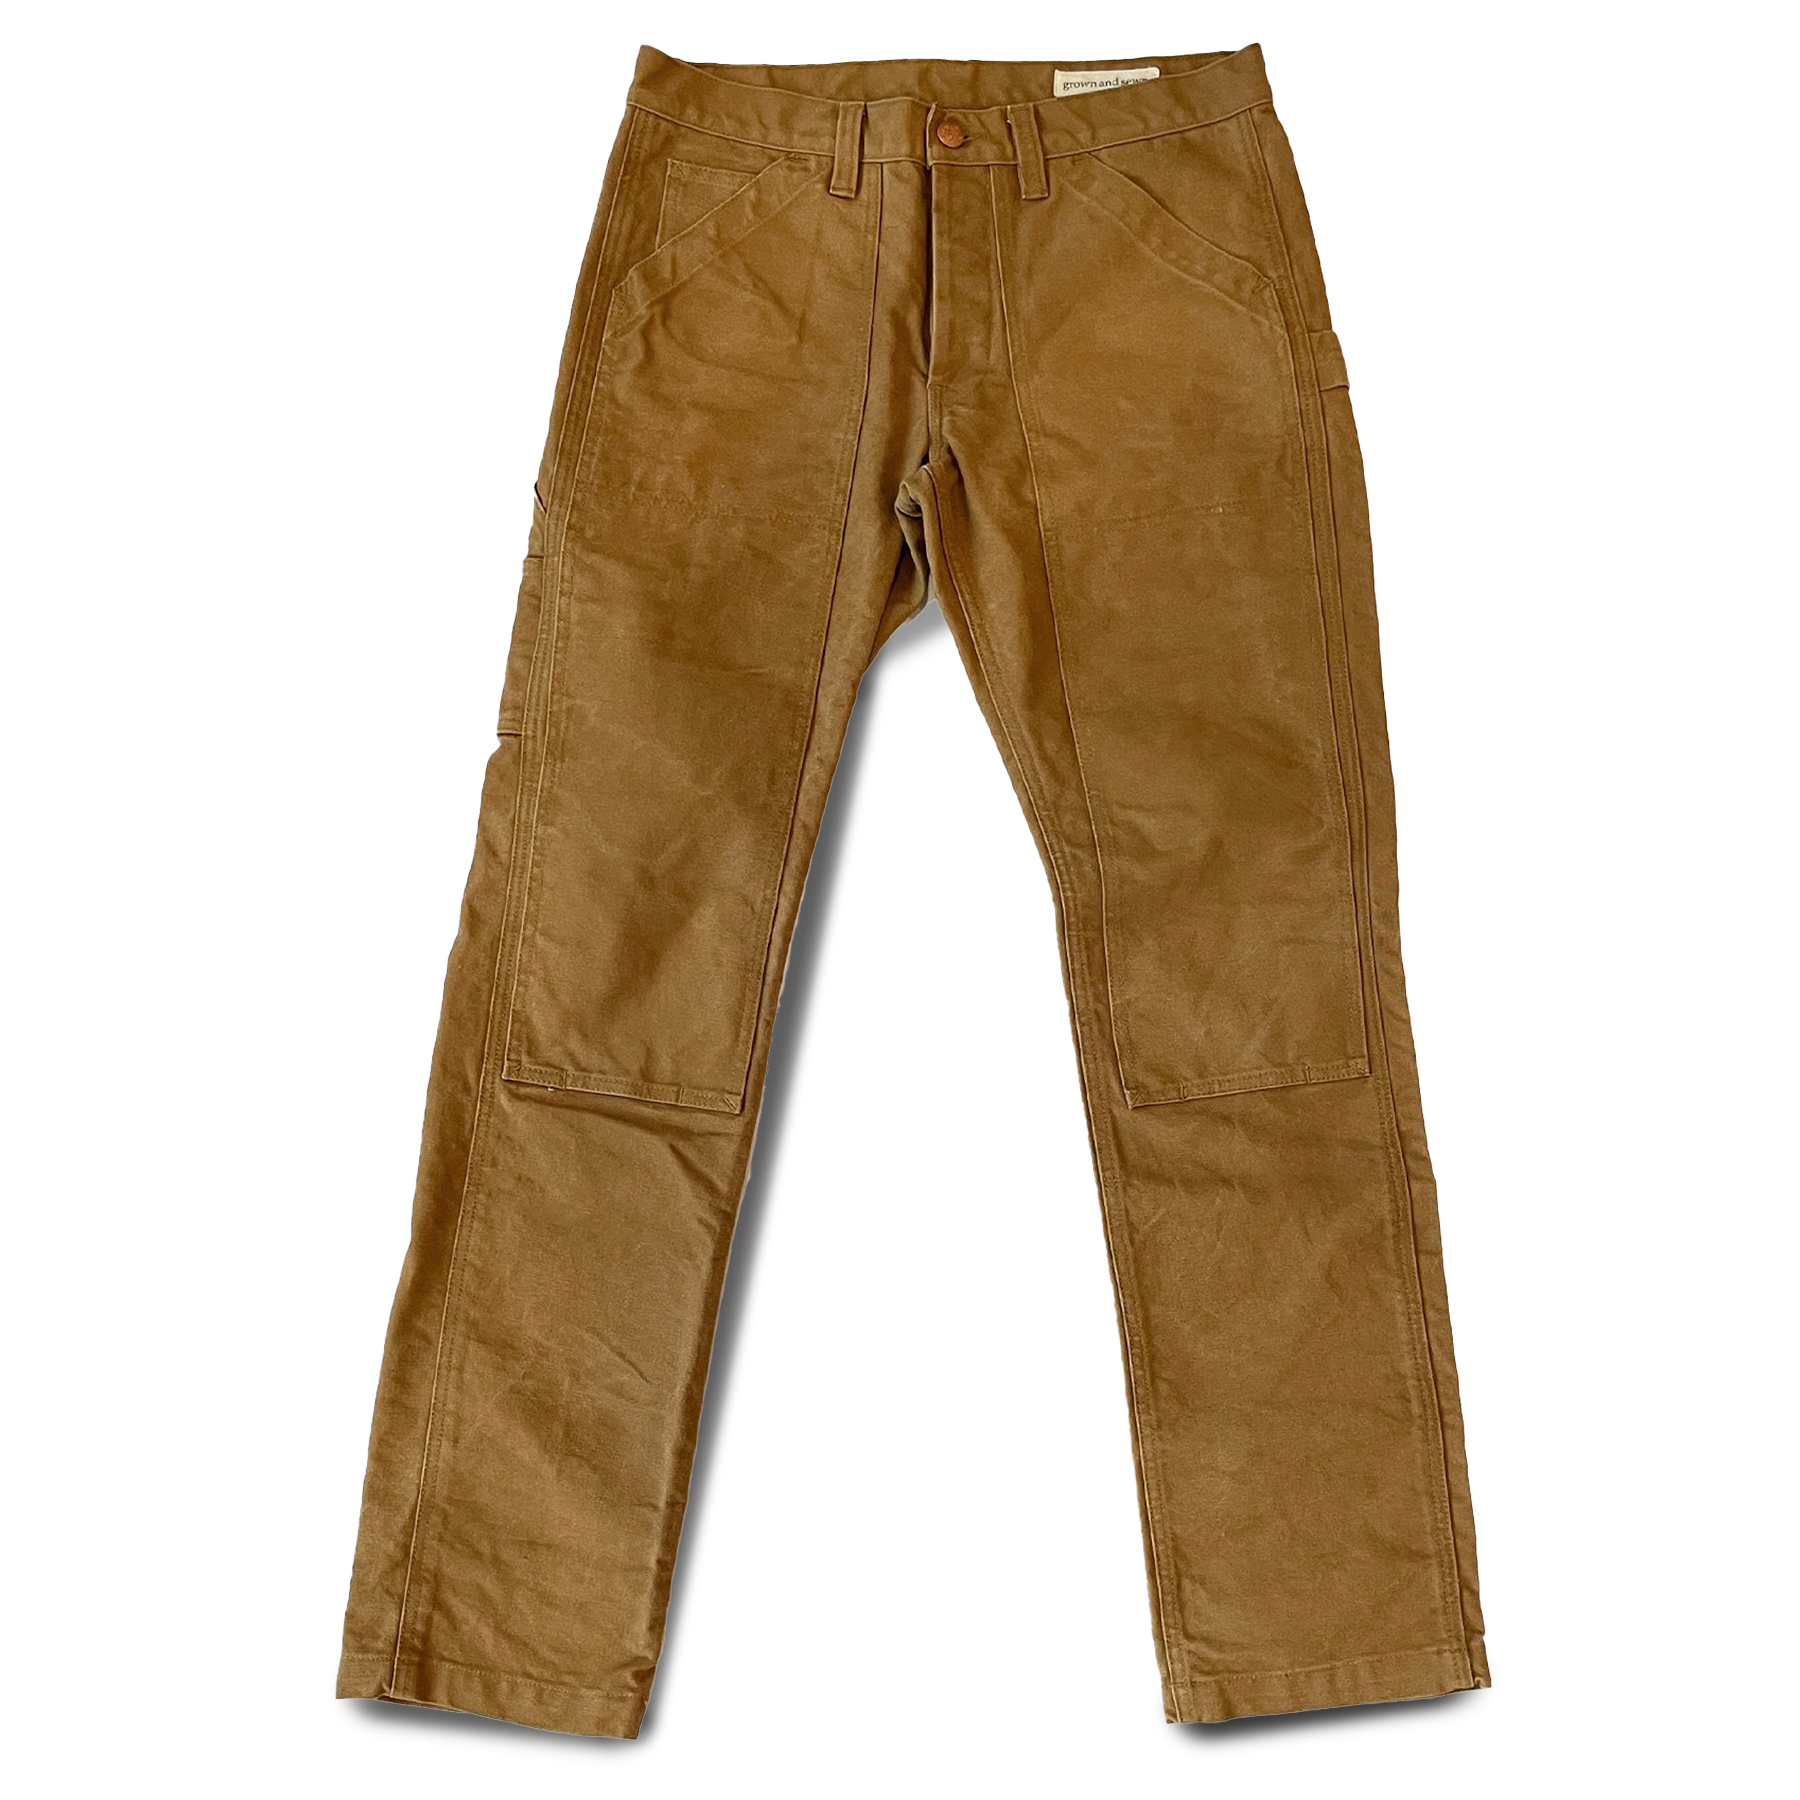 Union (Double Knee) Work Pant - Camel, PRE-SALE: SHIPS 11/15 - grown&sewn